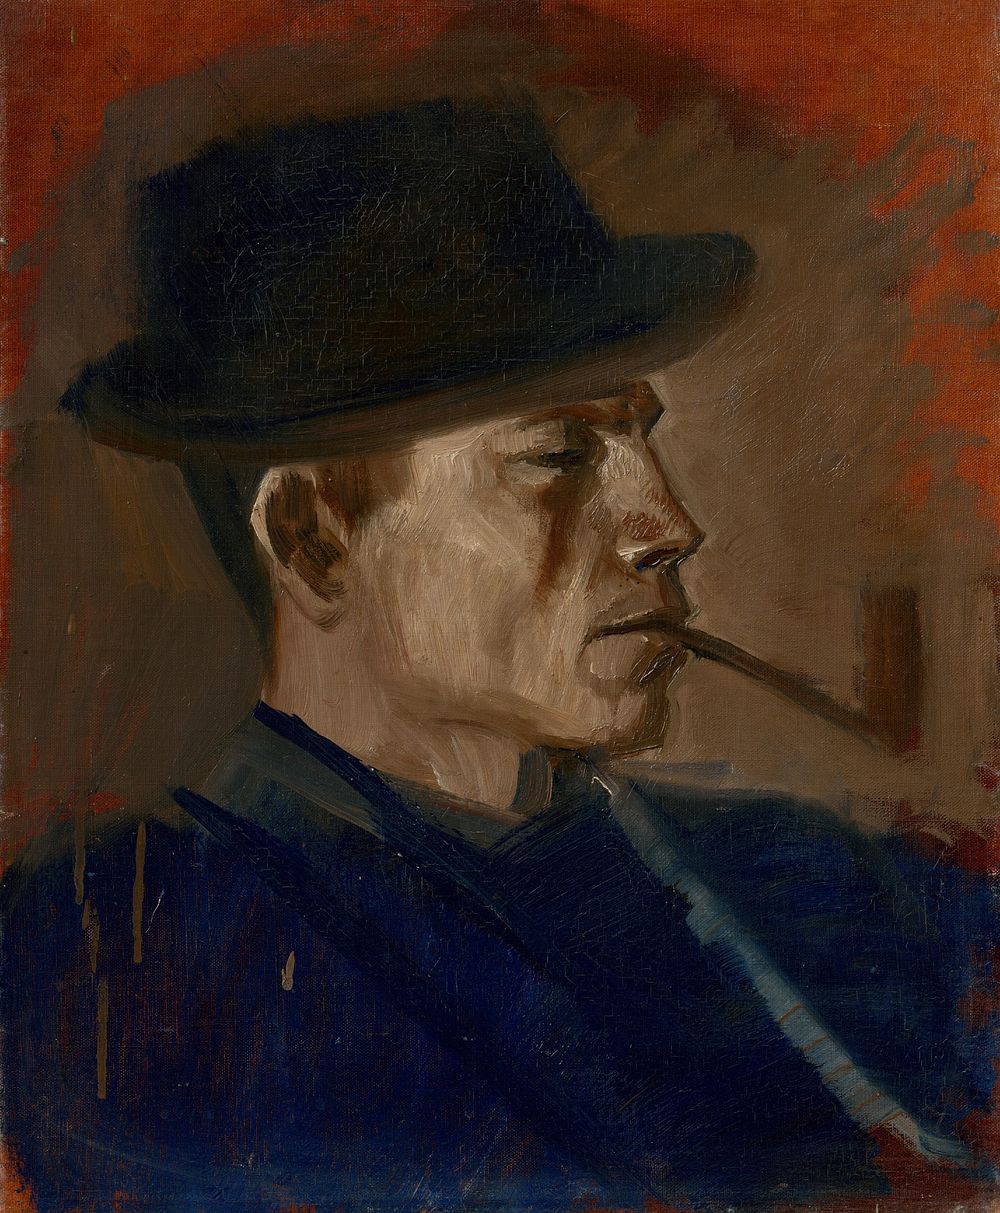 Man in blue smoking by Ladislav Mednyánszky